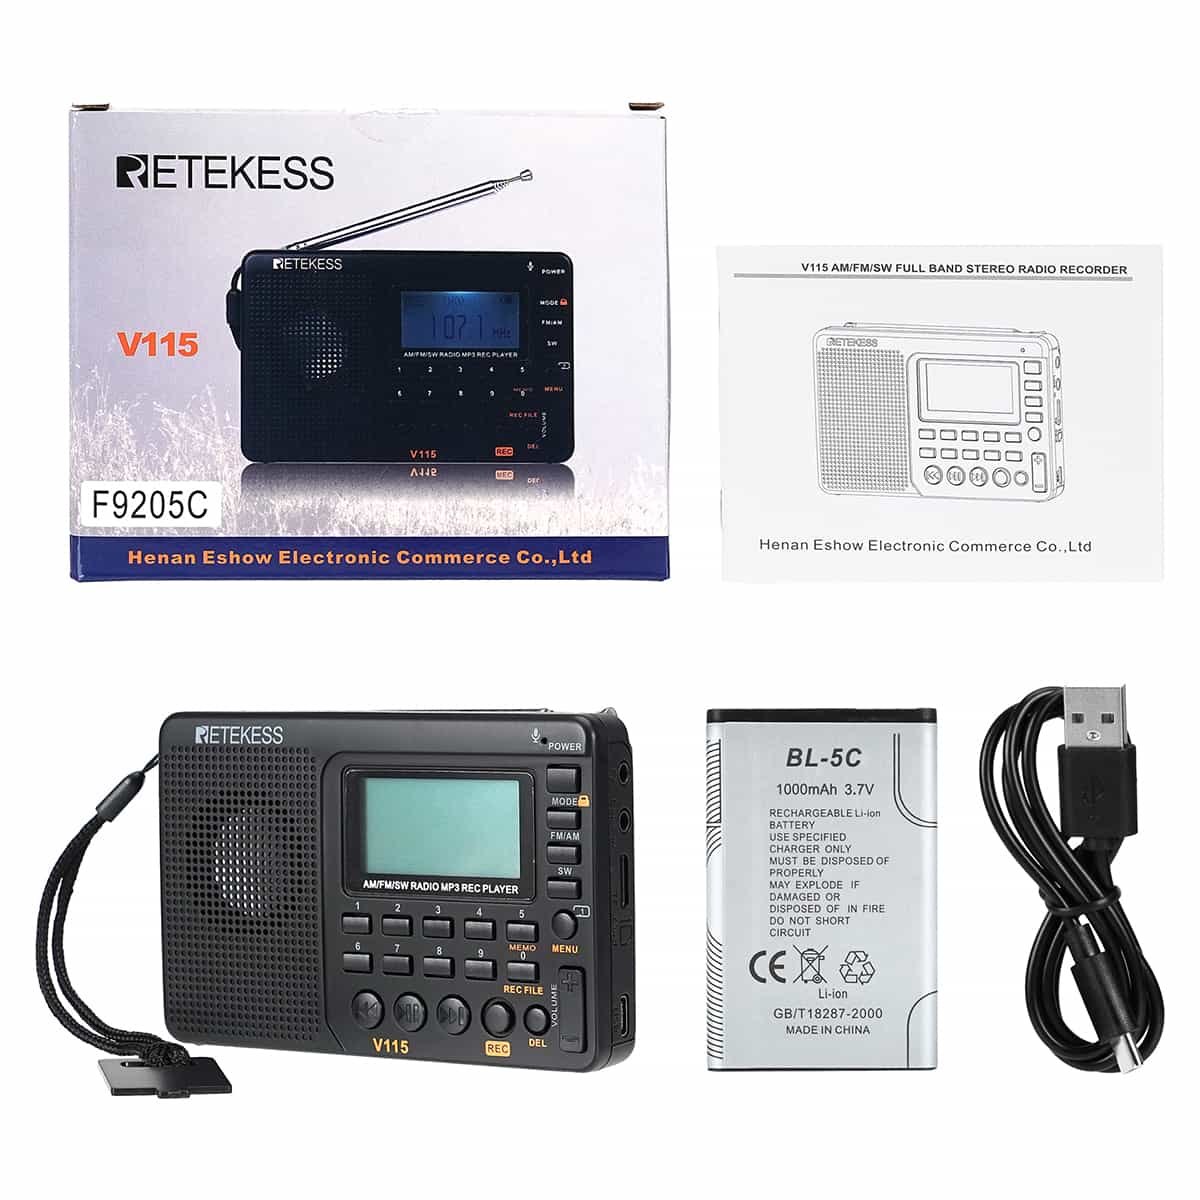 Desktop Digital AM FM Shortwave Radio And Portable AM/FM Shortwave Radio Set